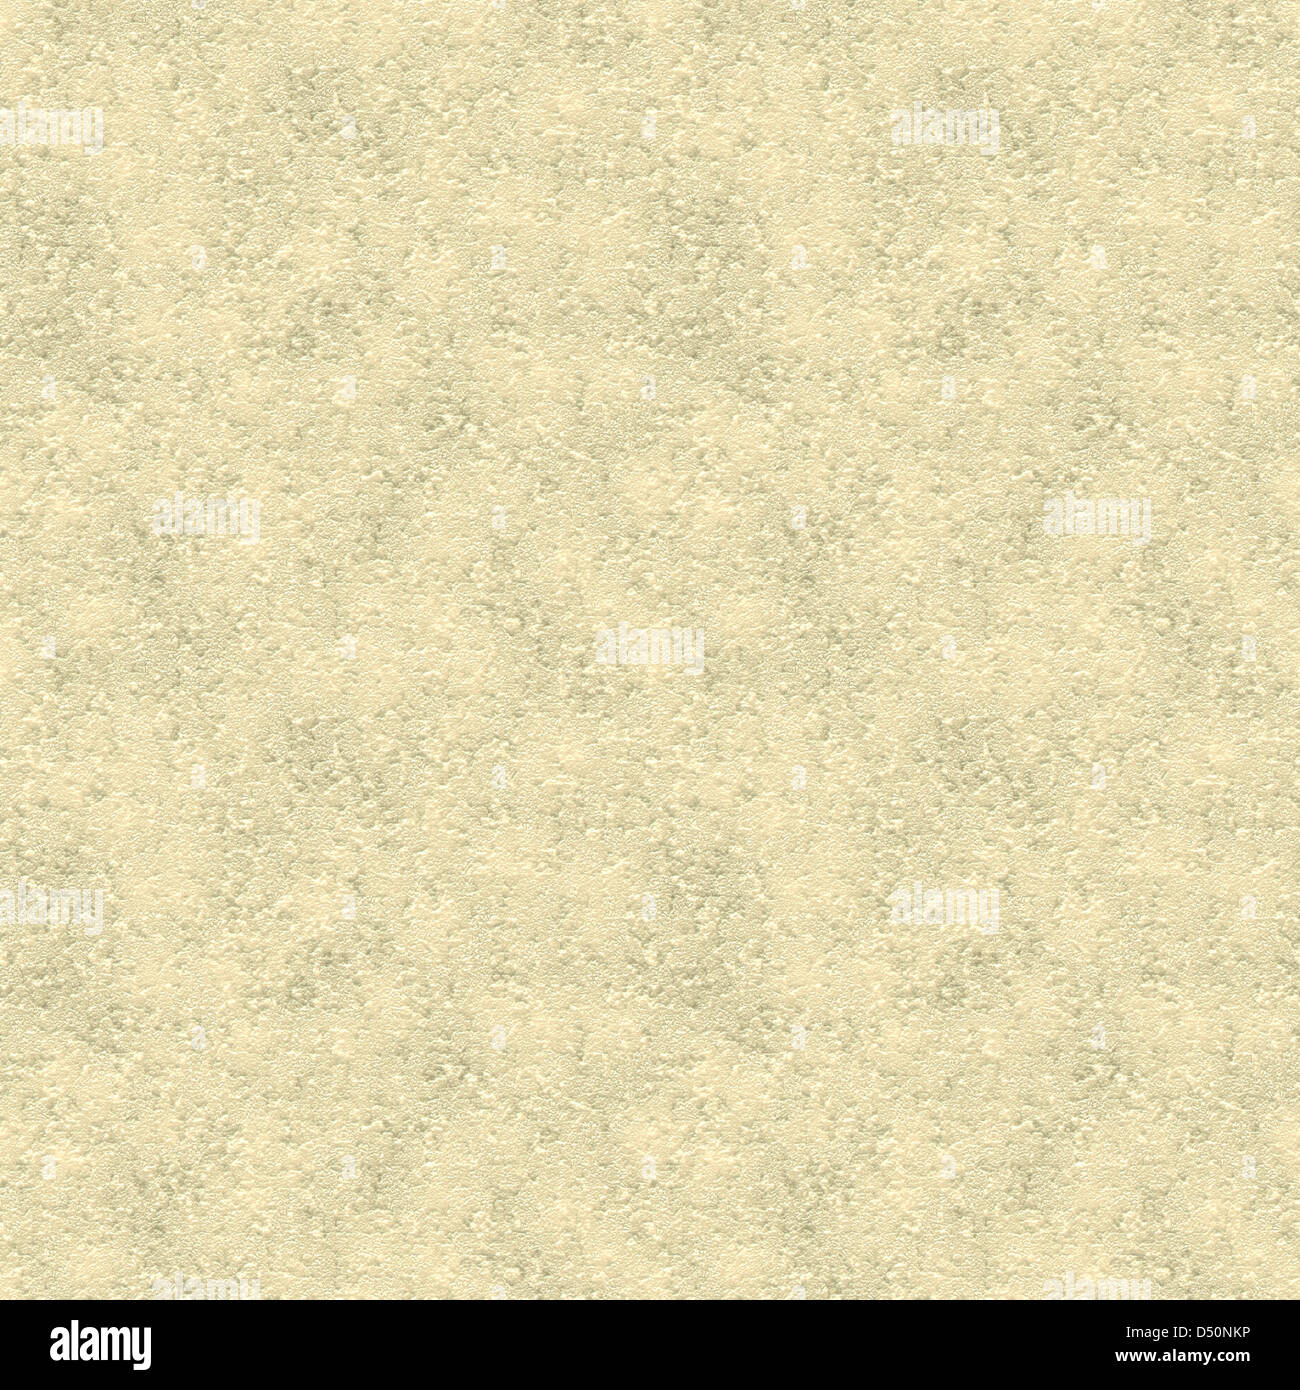 Linoleum Tile Seamless Pattern Illustration Stock Photo - Alamy